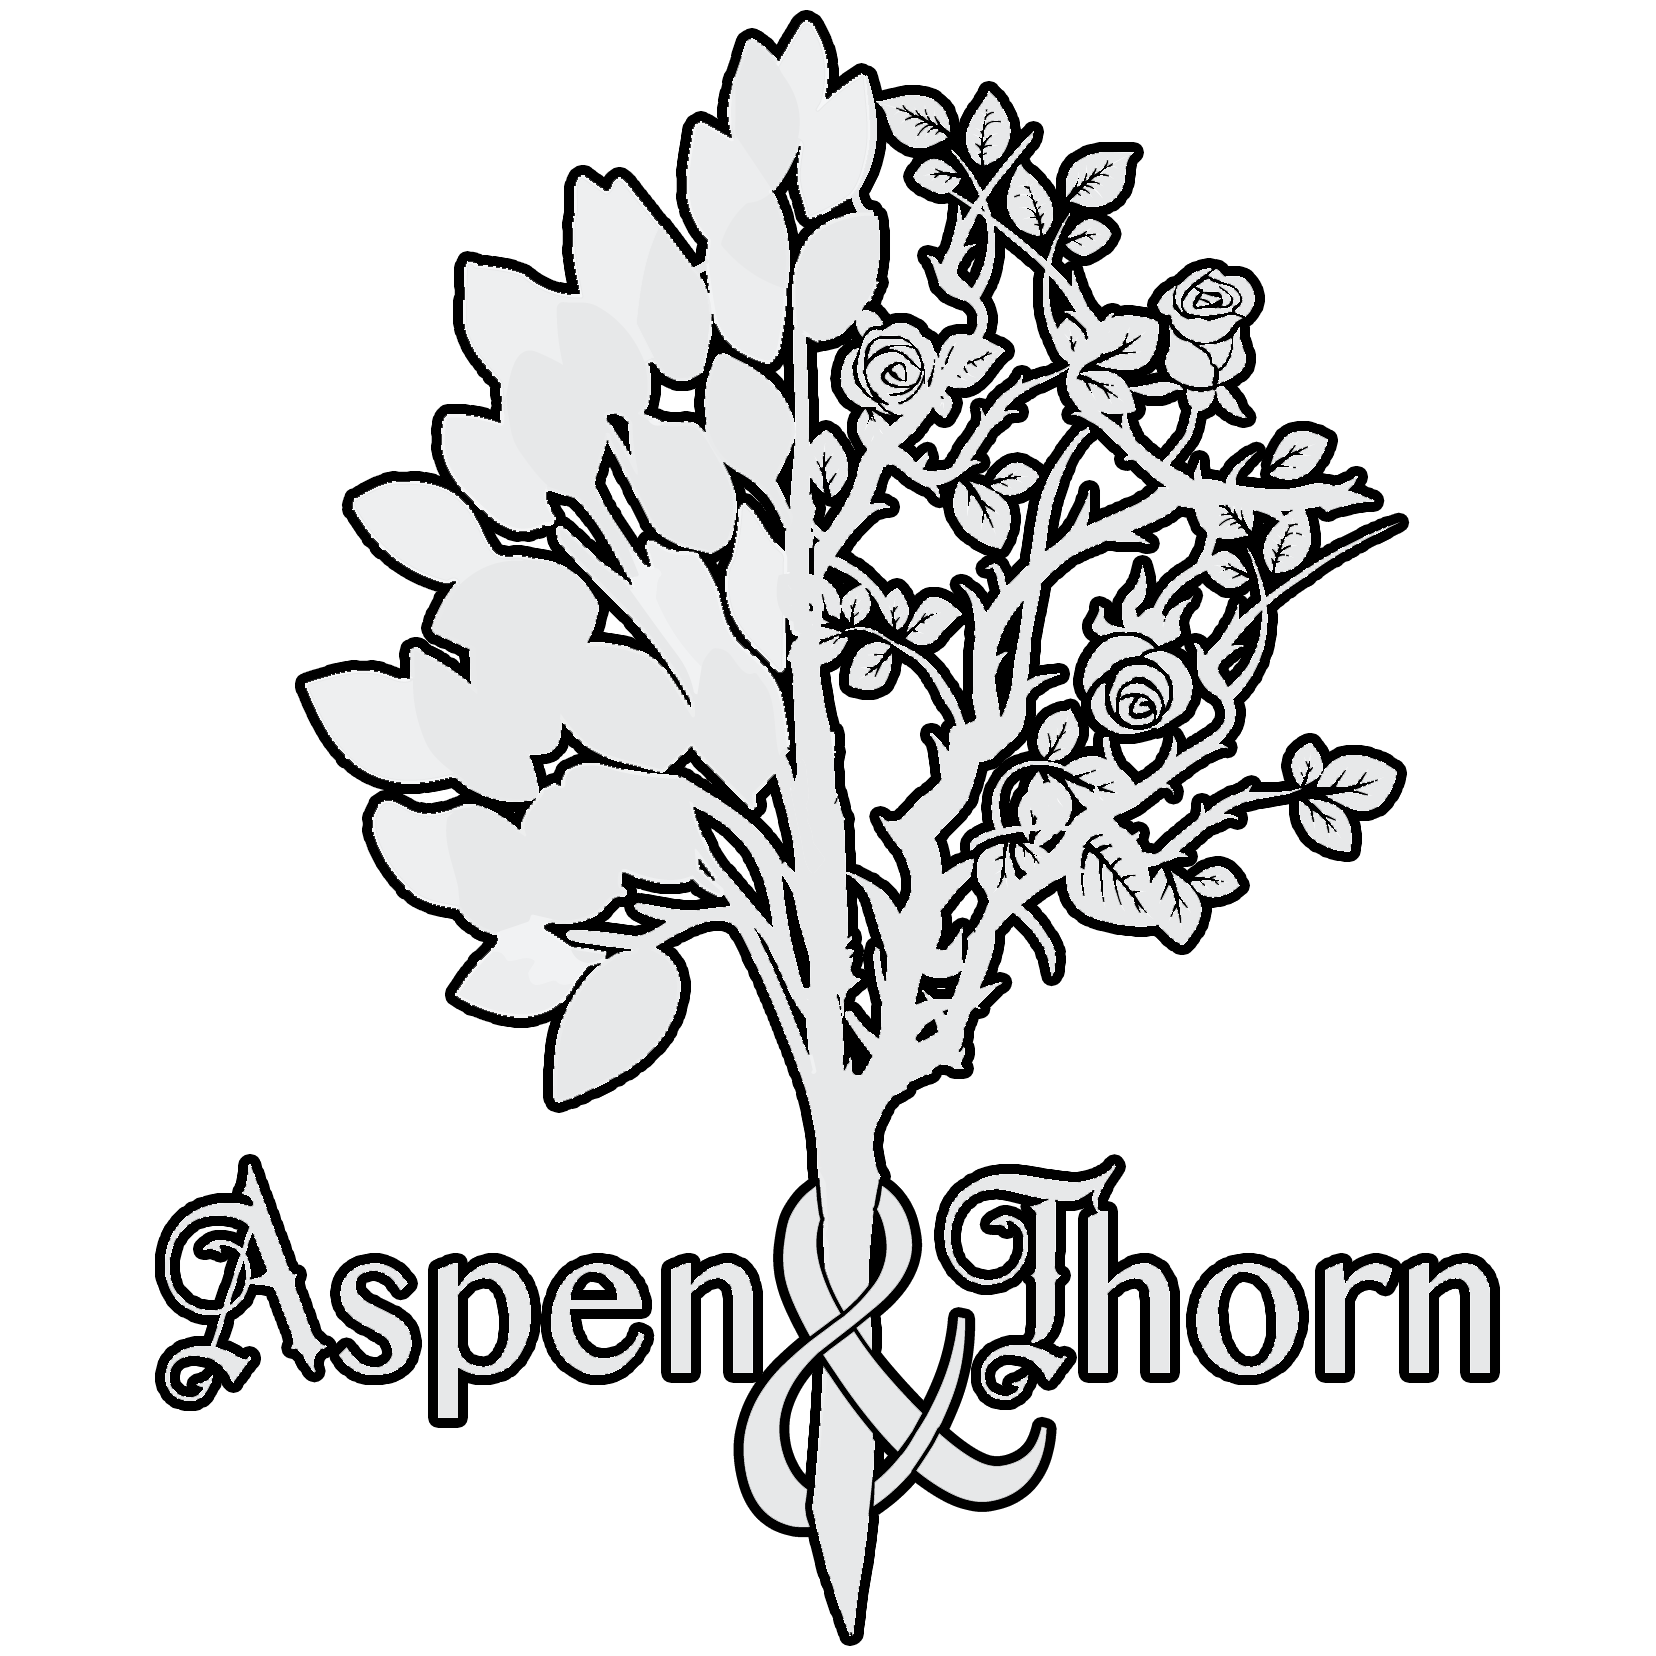 Aspen & Thorn Press | Publishers of Fog & Fireflies by T.H. Lehnen